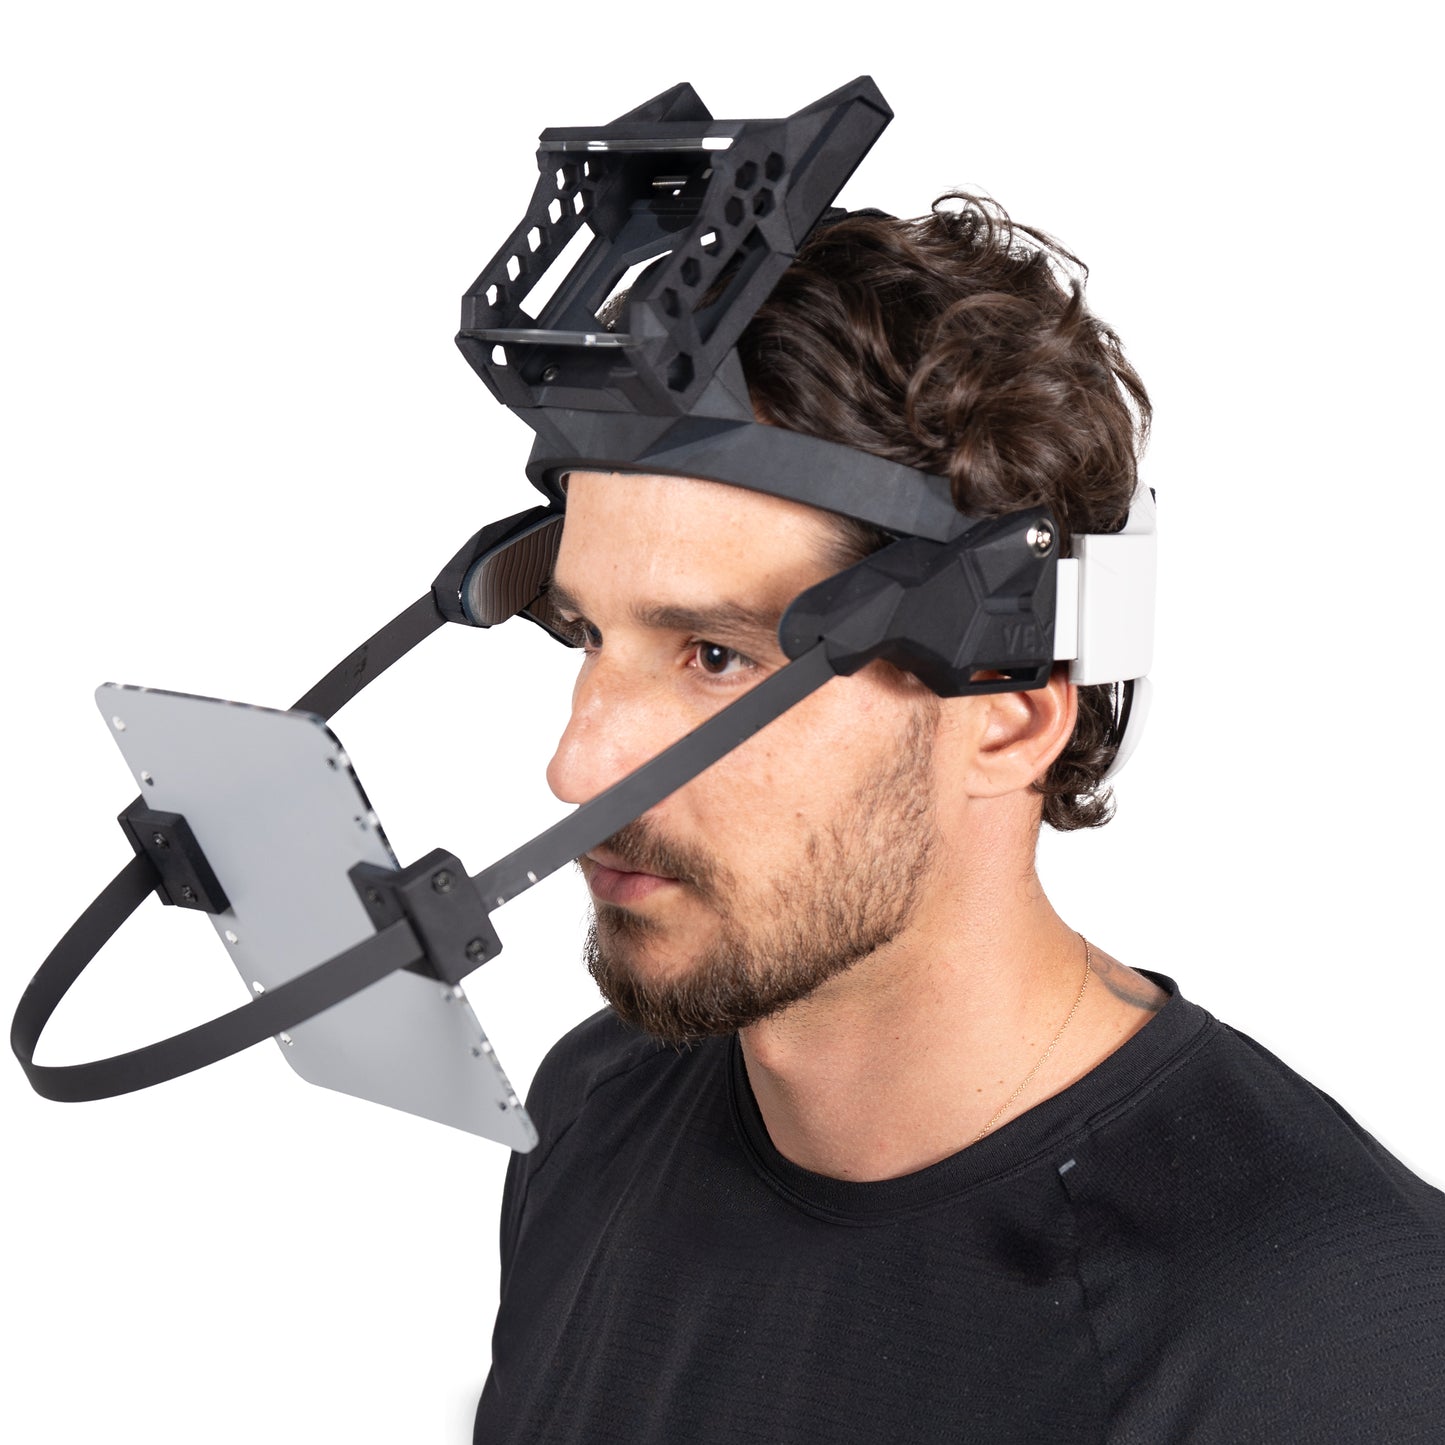 Perception Neuron Face Capture Helmet Noitom International, Inc